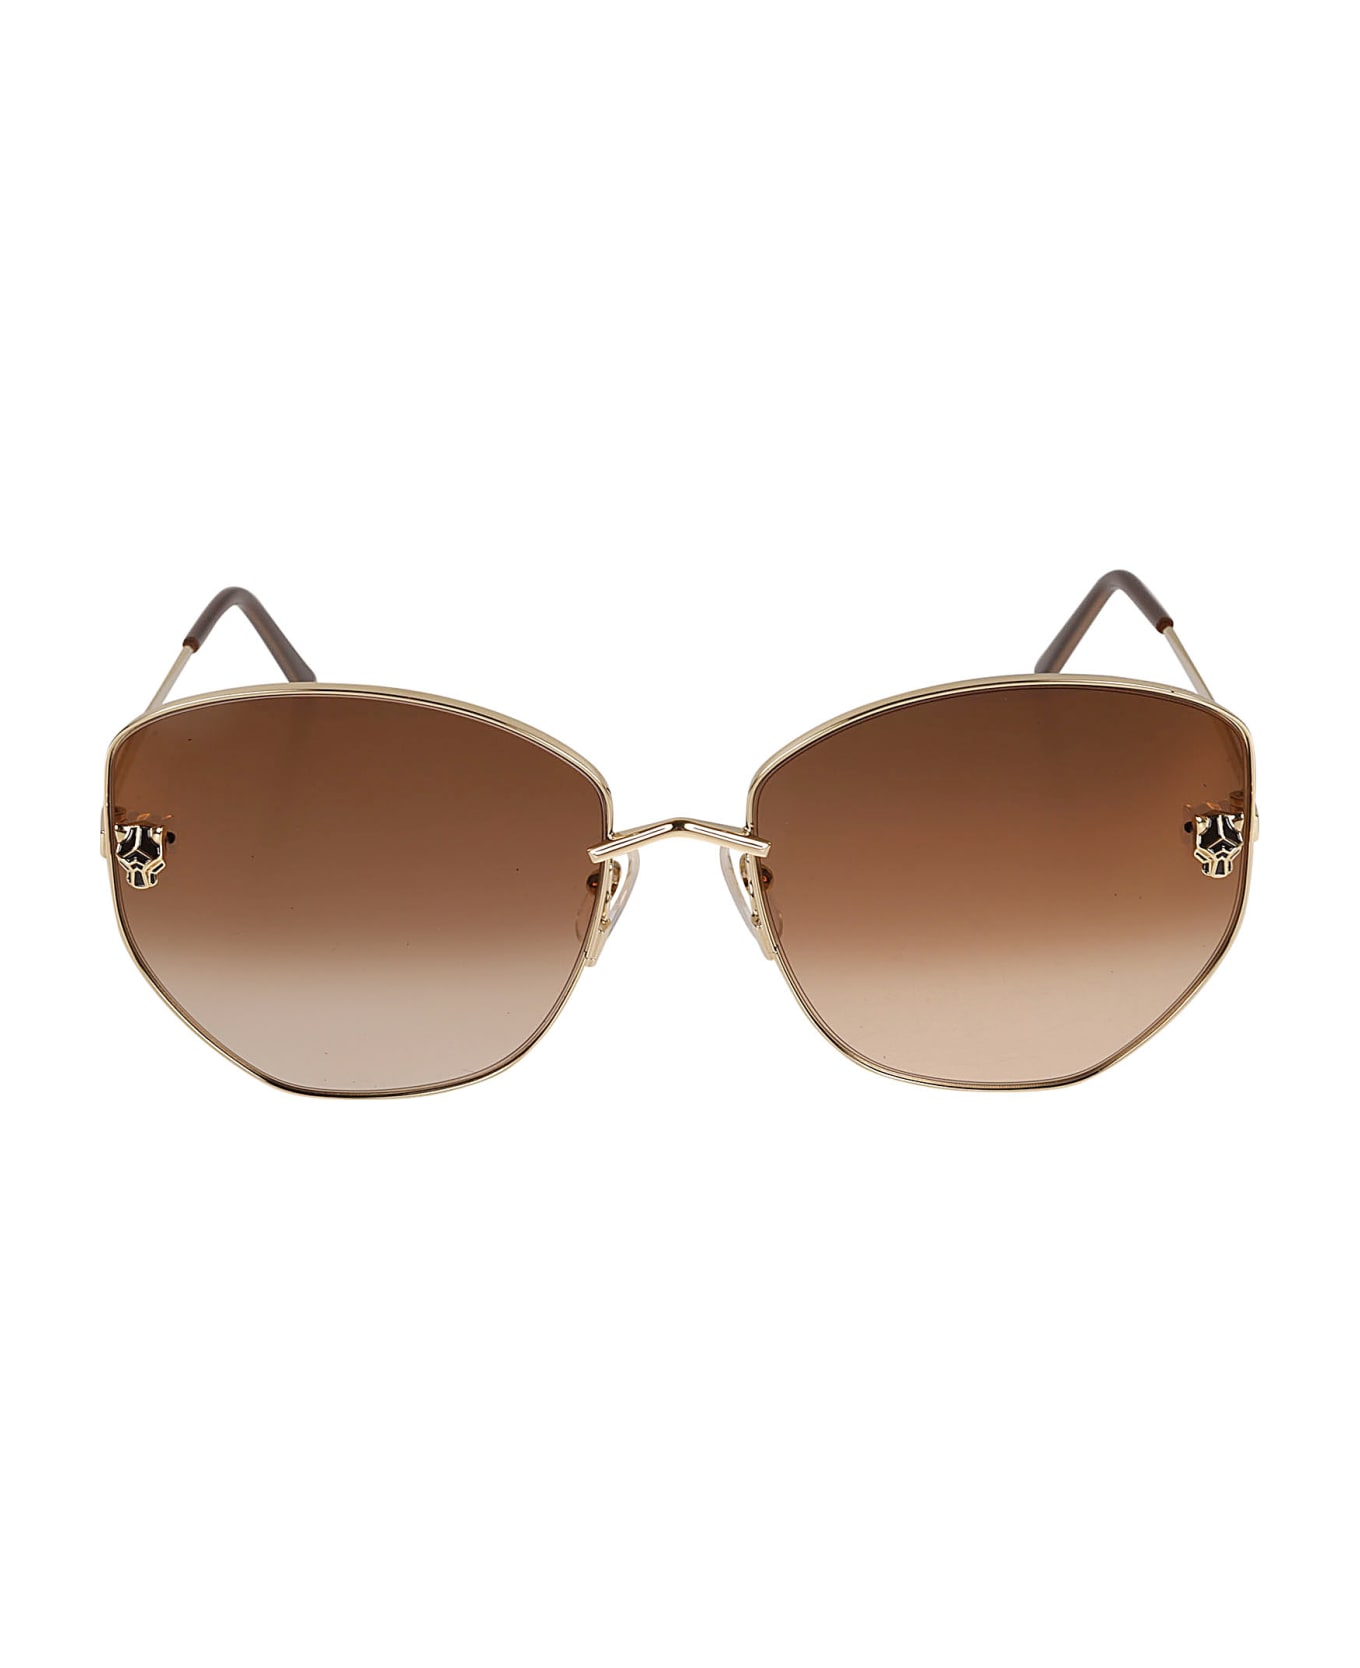 Cartier Eyewear Butterfly Classic Sunglasses - 002 gold gold brown サングラス